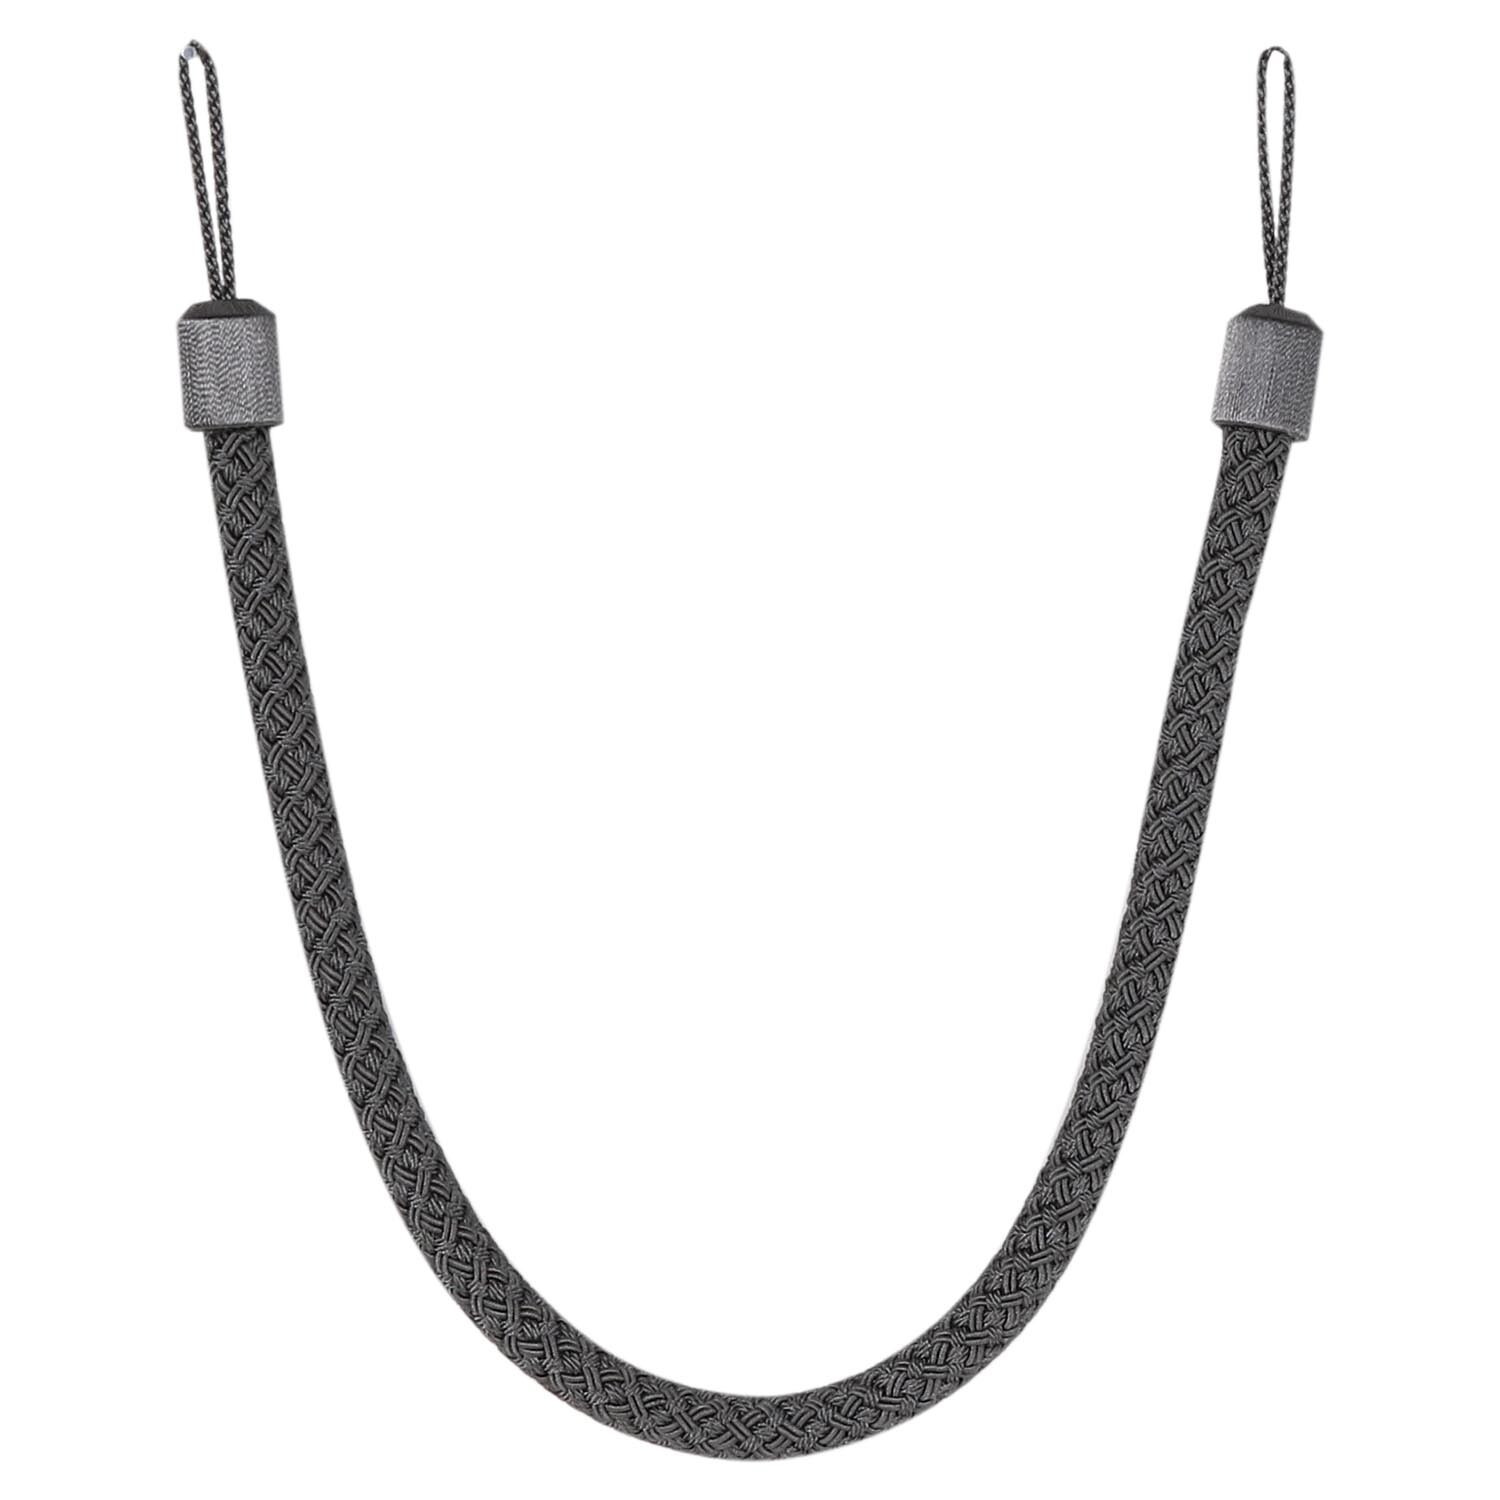 Braided Rope Tieback - Charcoal Image